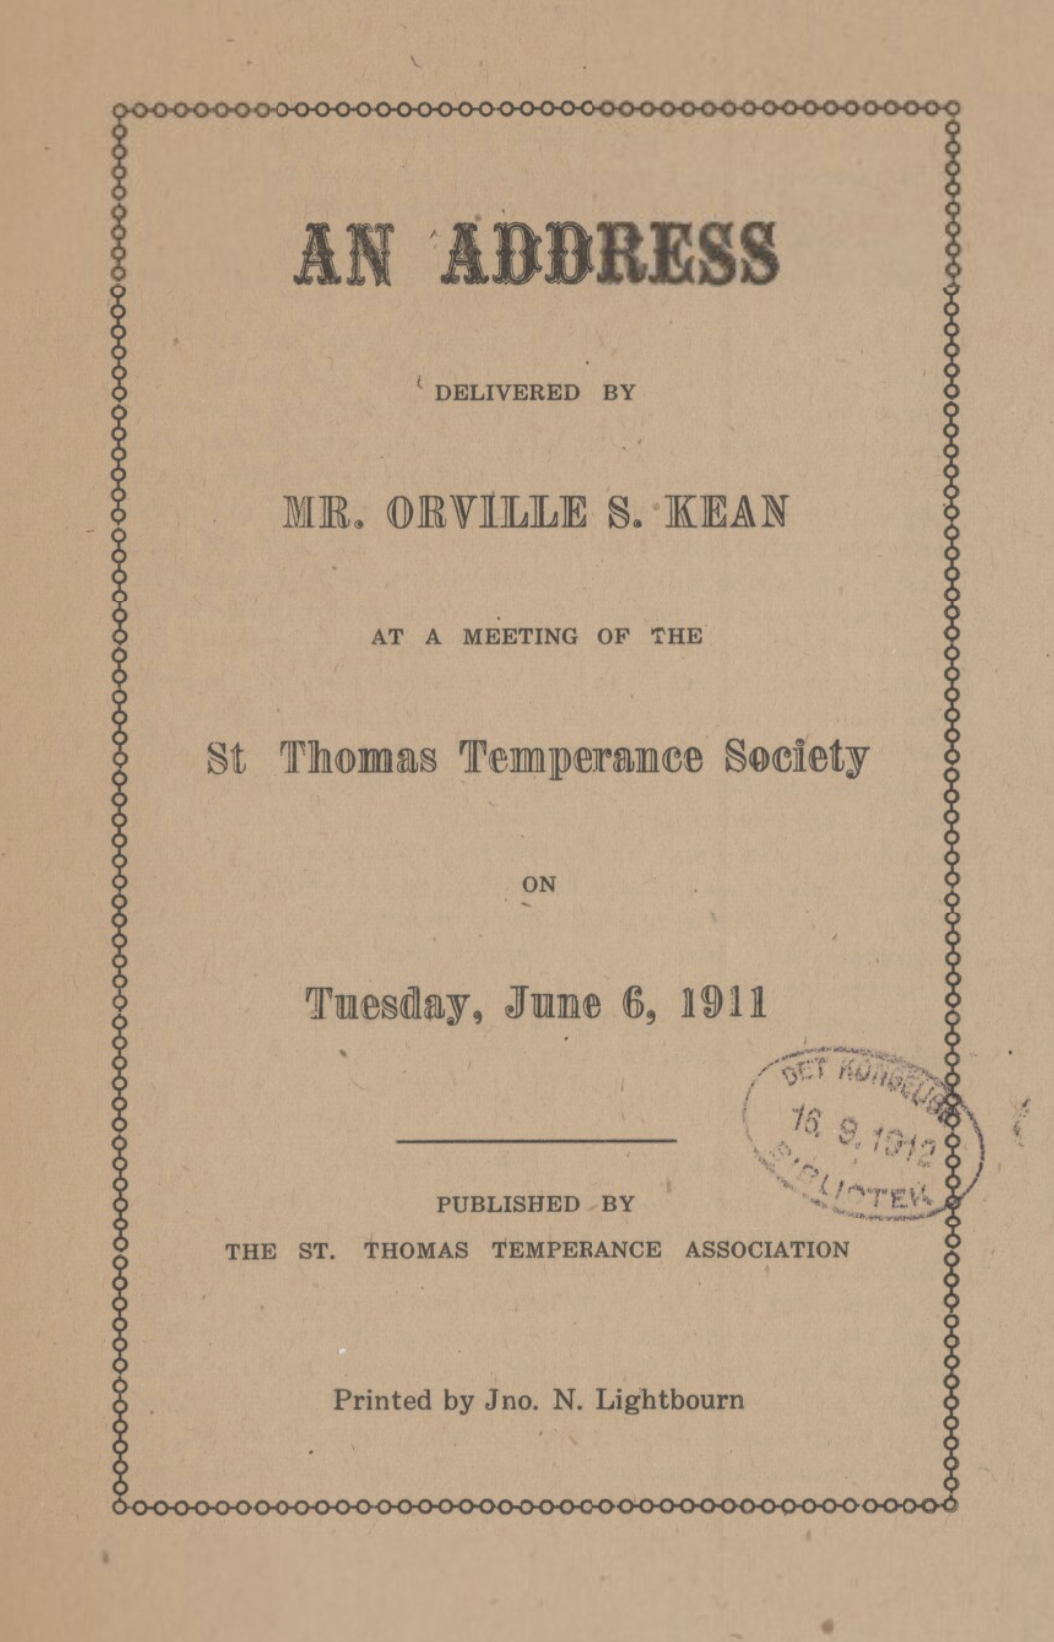 Orville S. Kean of St. Thomas, Danish West Indies now the US Virgin Islands